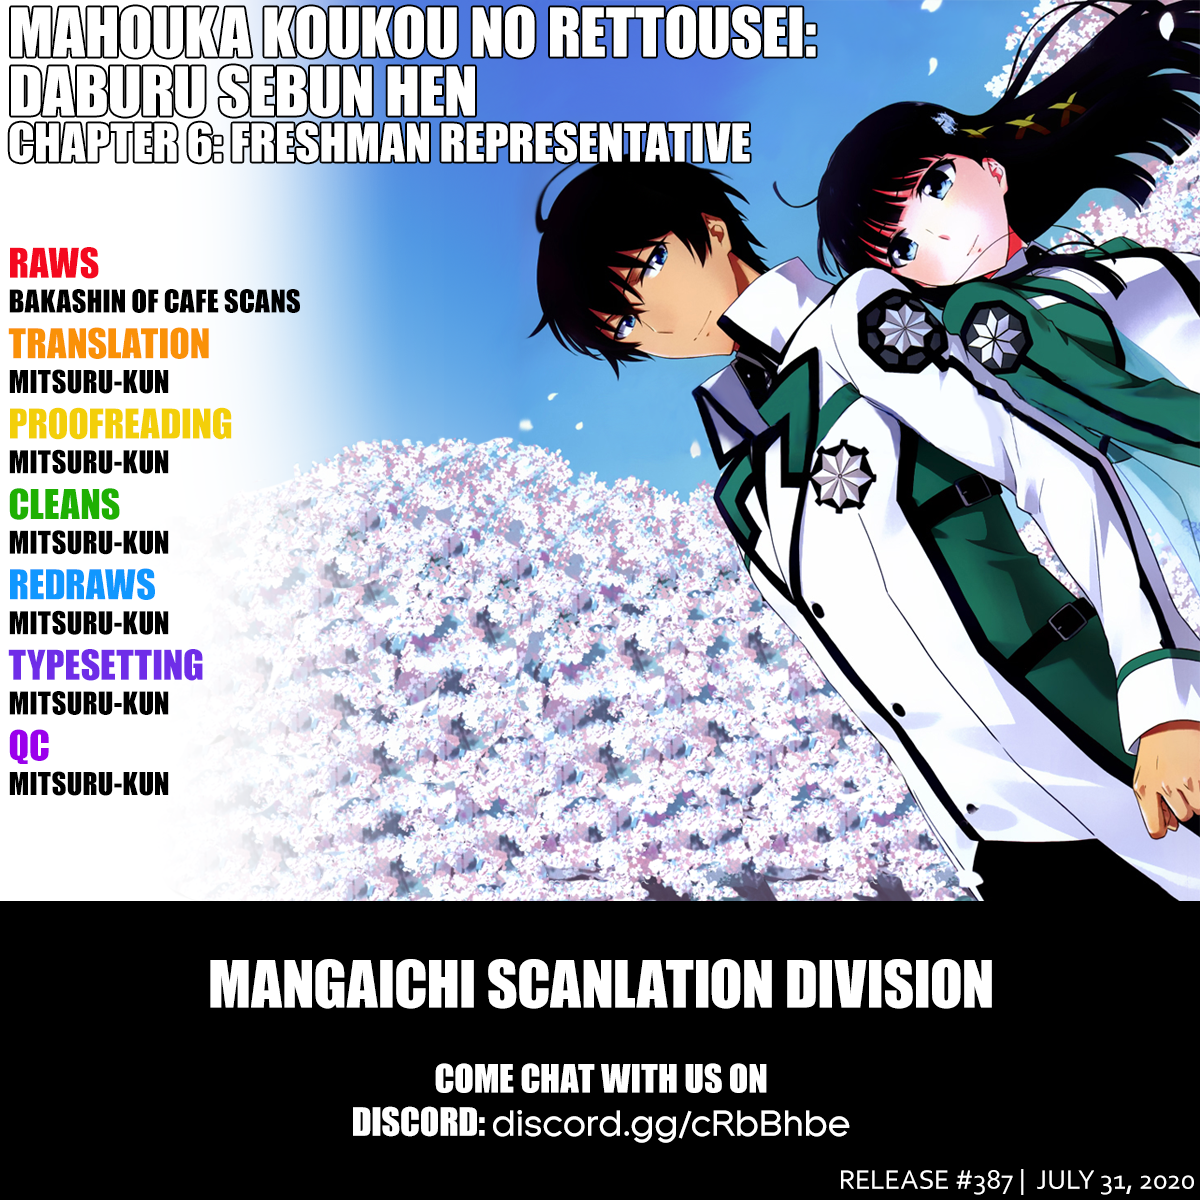 Mahouka Koukou No Rettousei - Double Seven Hen Vol.1 Chapter 6: Freshman Representative - Picture 1